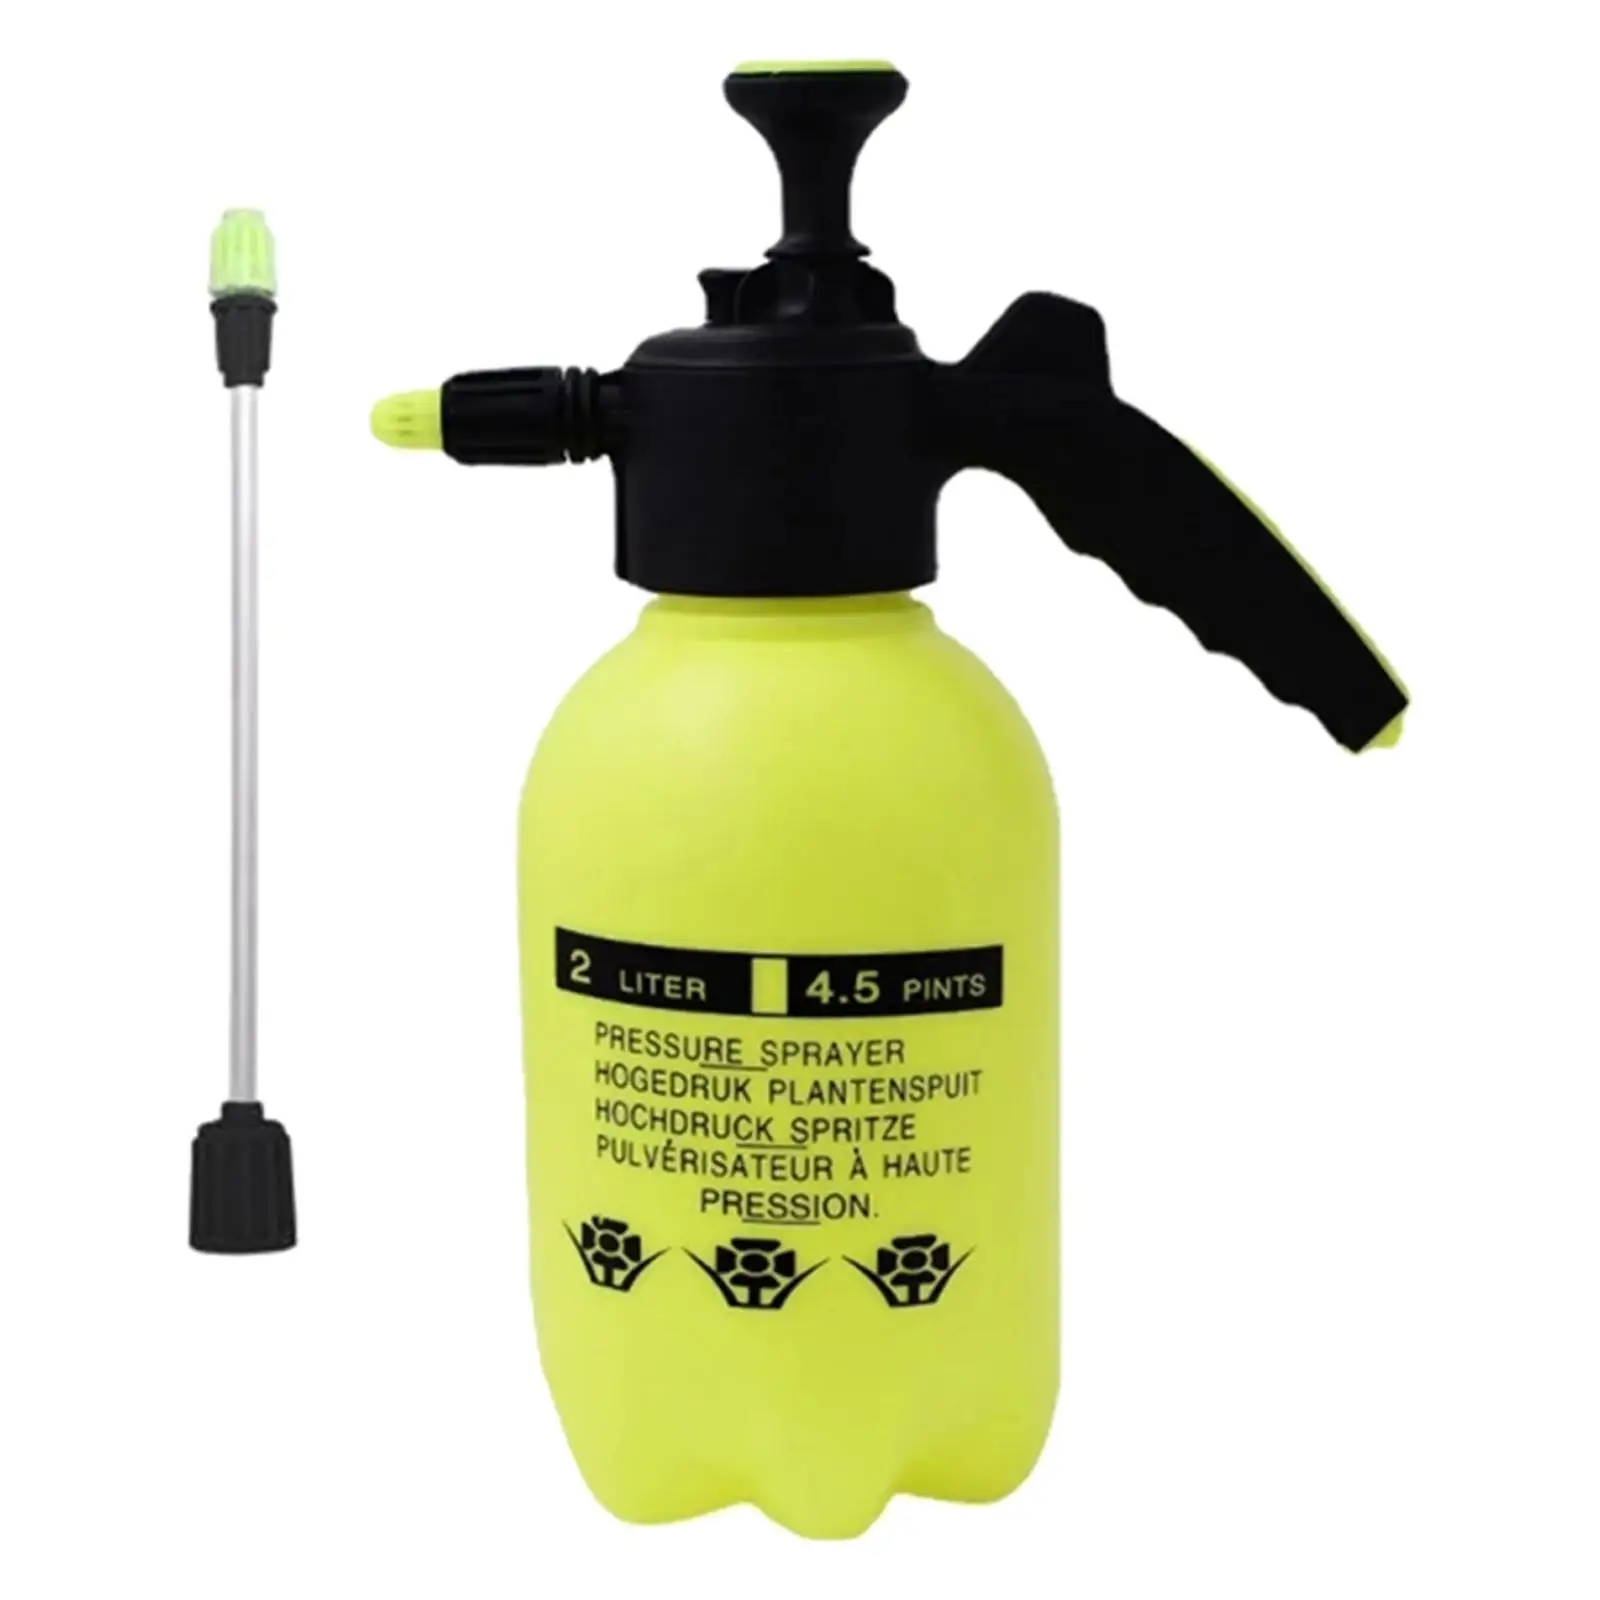 Multipurpose Garden Pump Sprayer with Adjustable Nozzle Pressure Sprayer Bottle for Gardening Cleaning Windows Watering